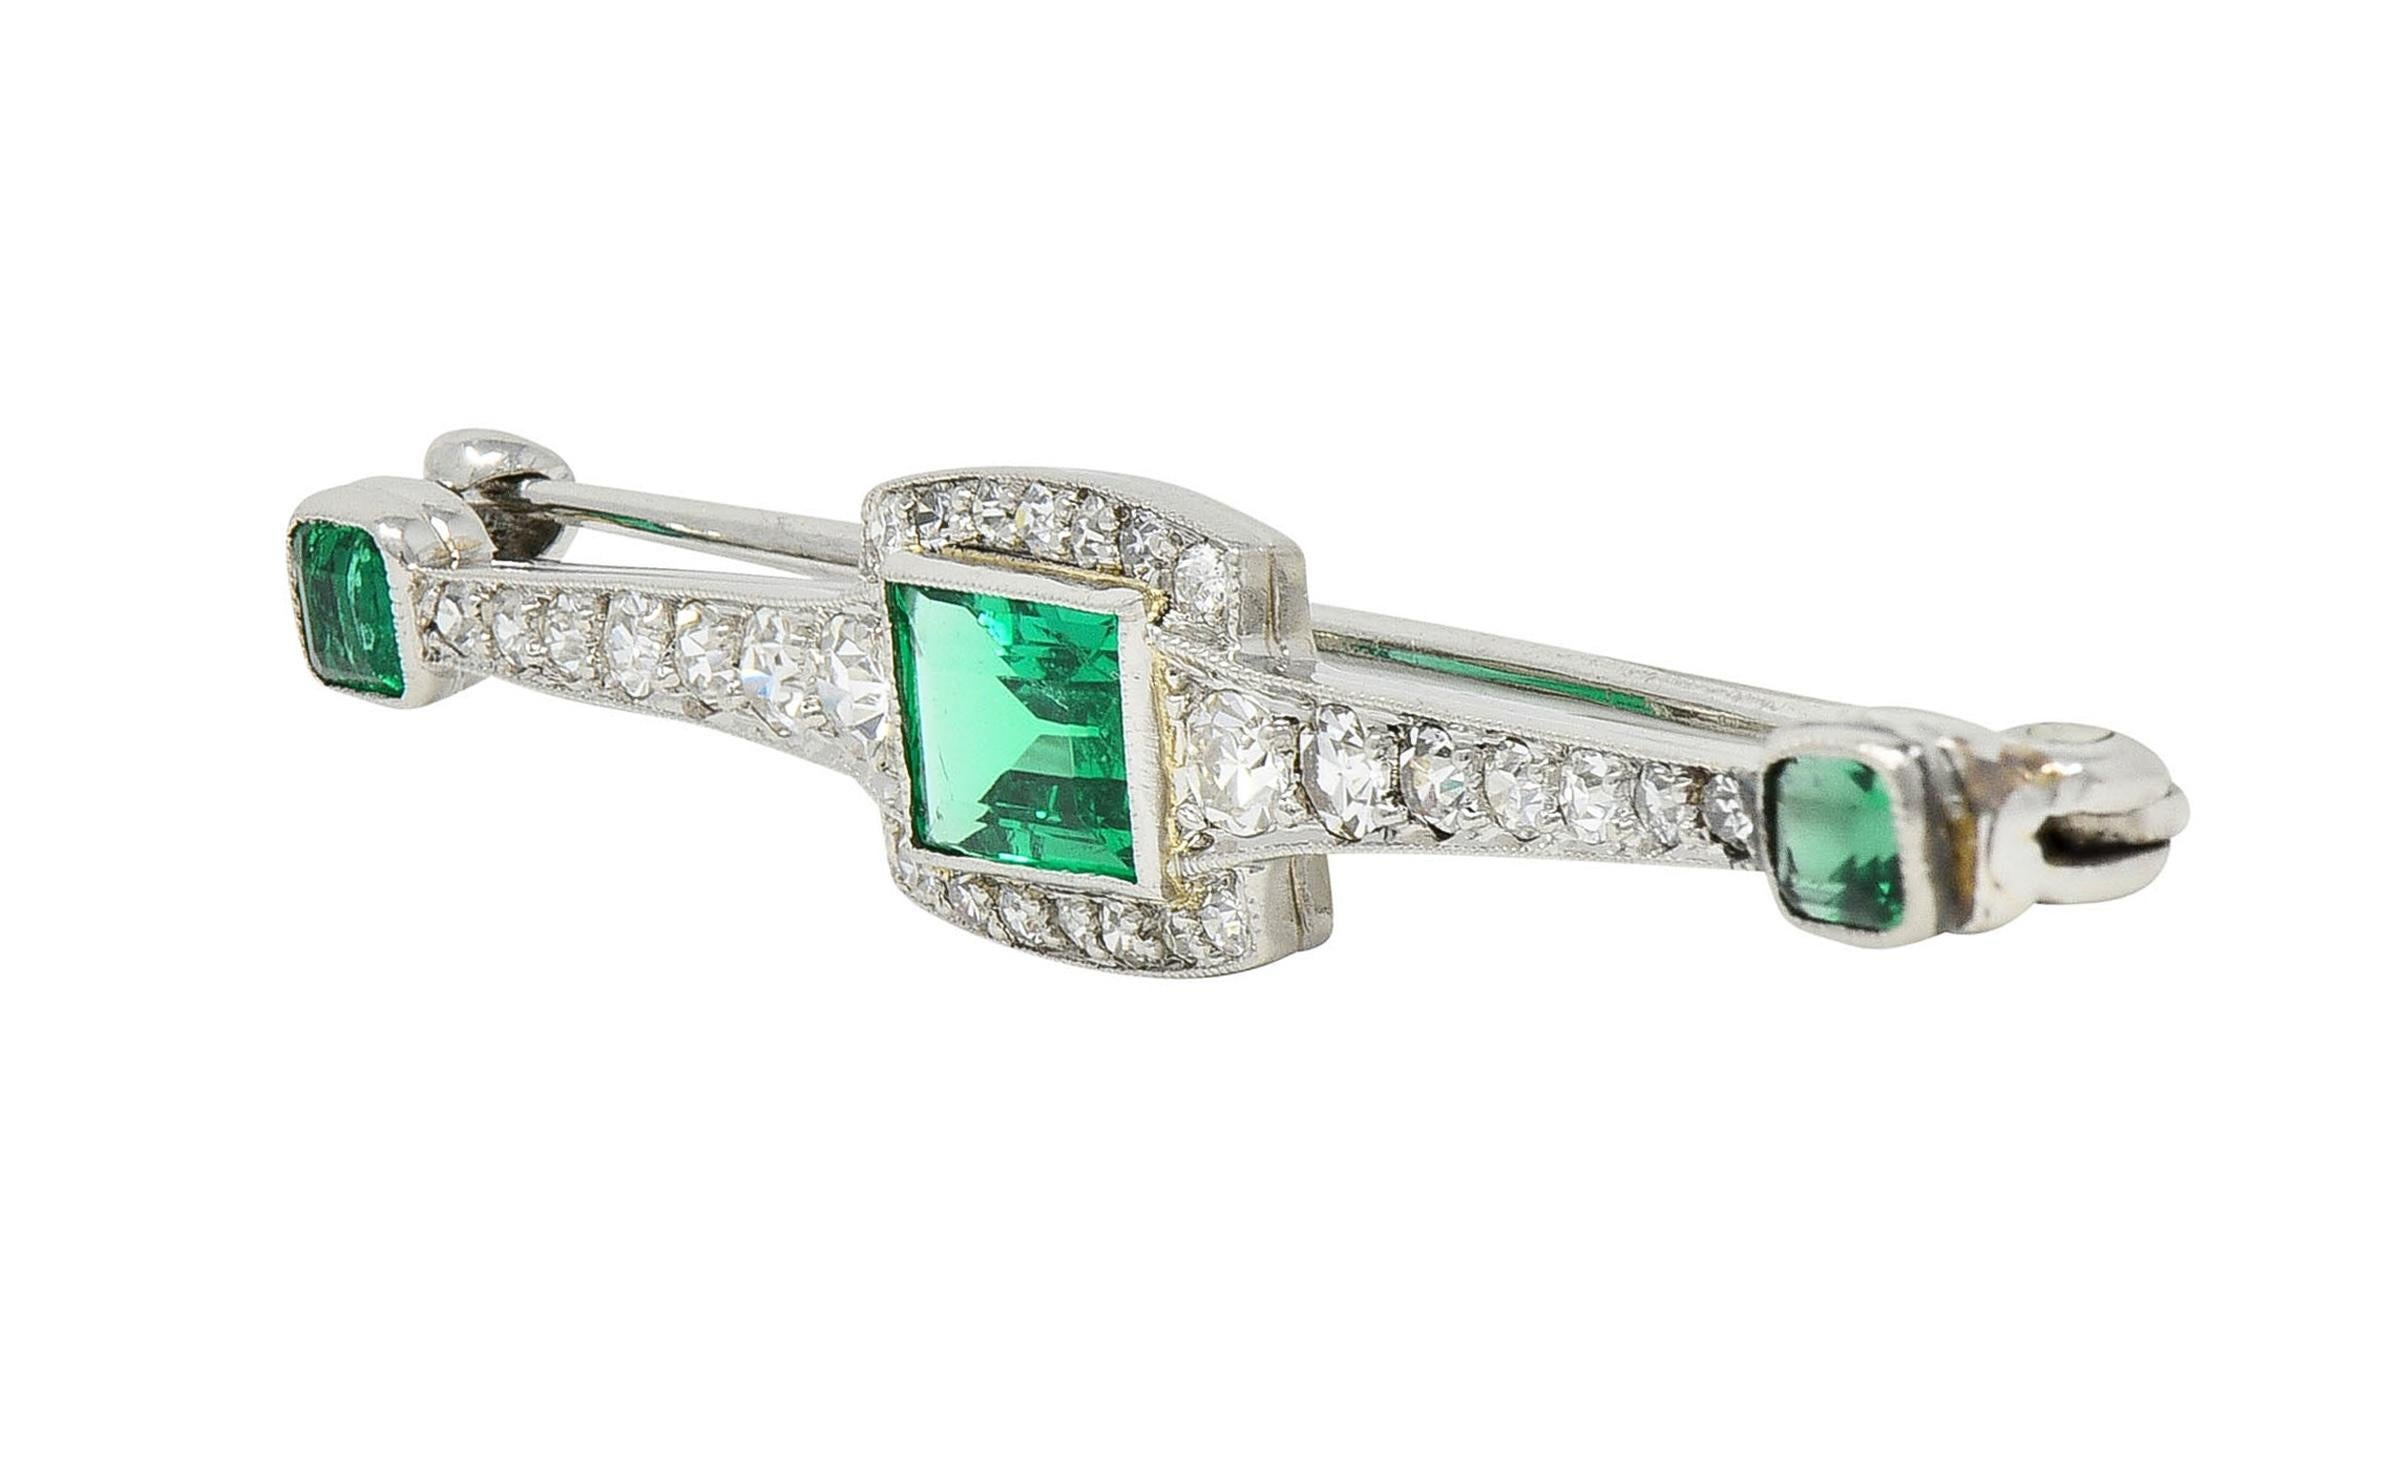 Single Cut Dreicer & Co. Art Deco 1.49 CTW Emerald Diamond Platinum Antique Bar Brooch